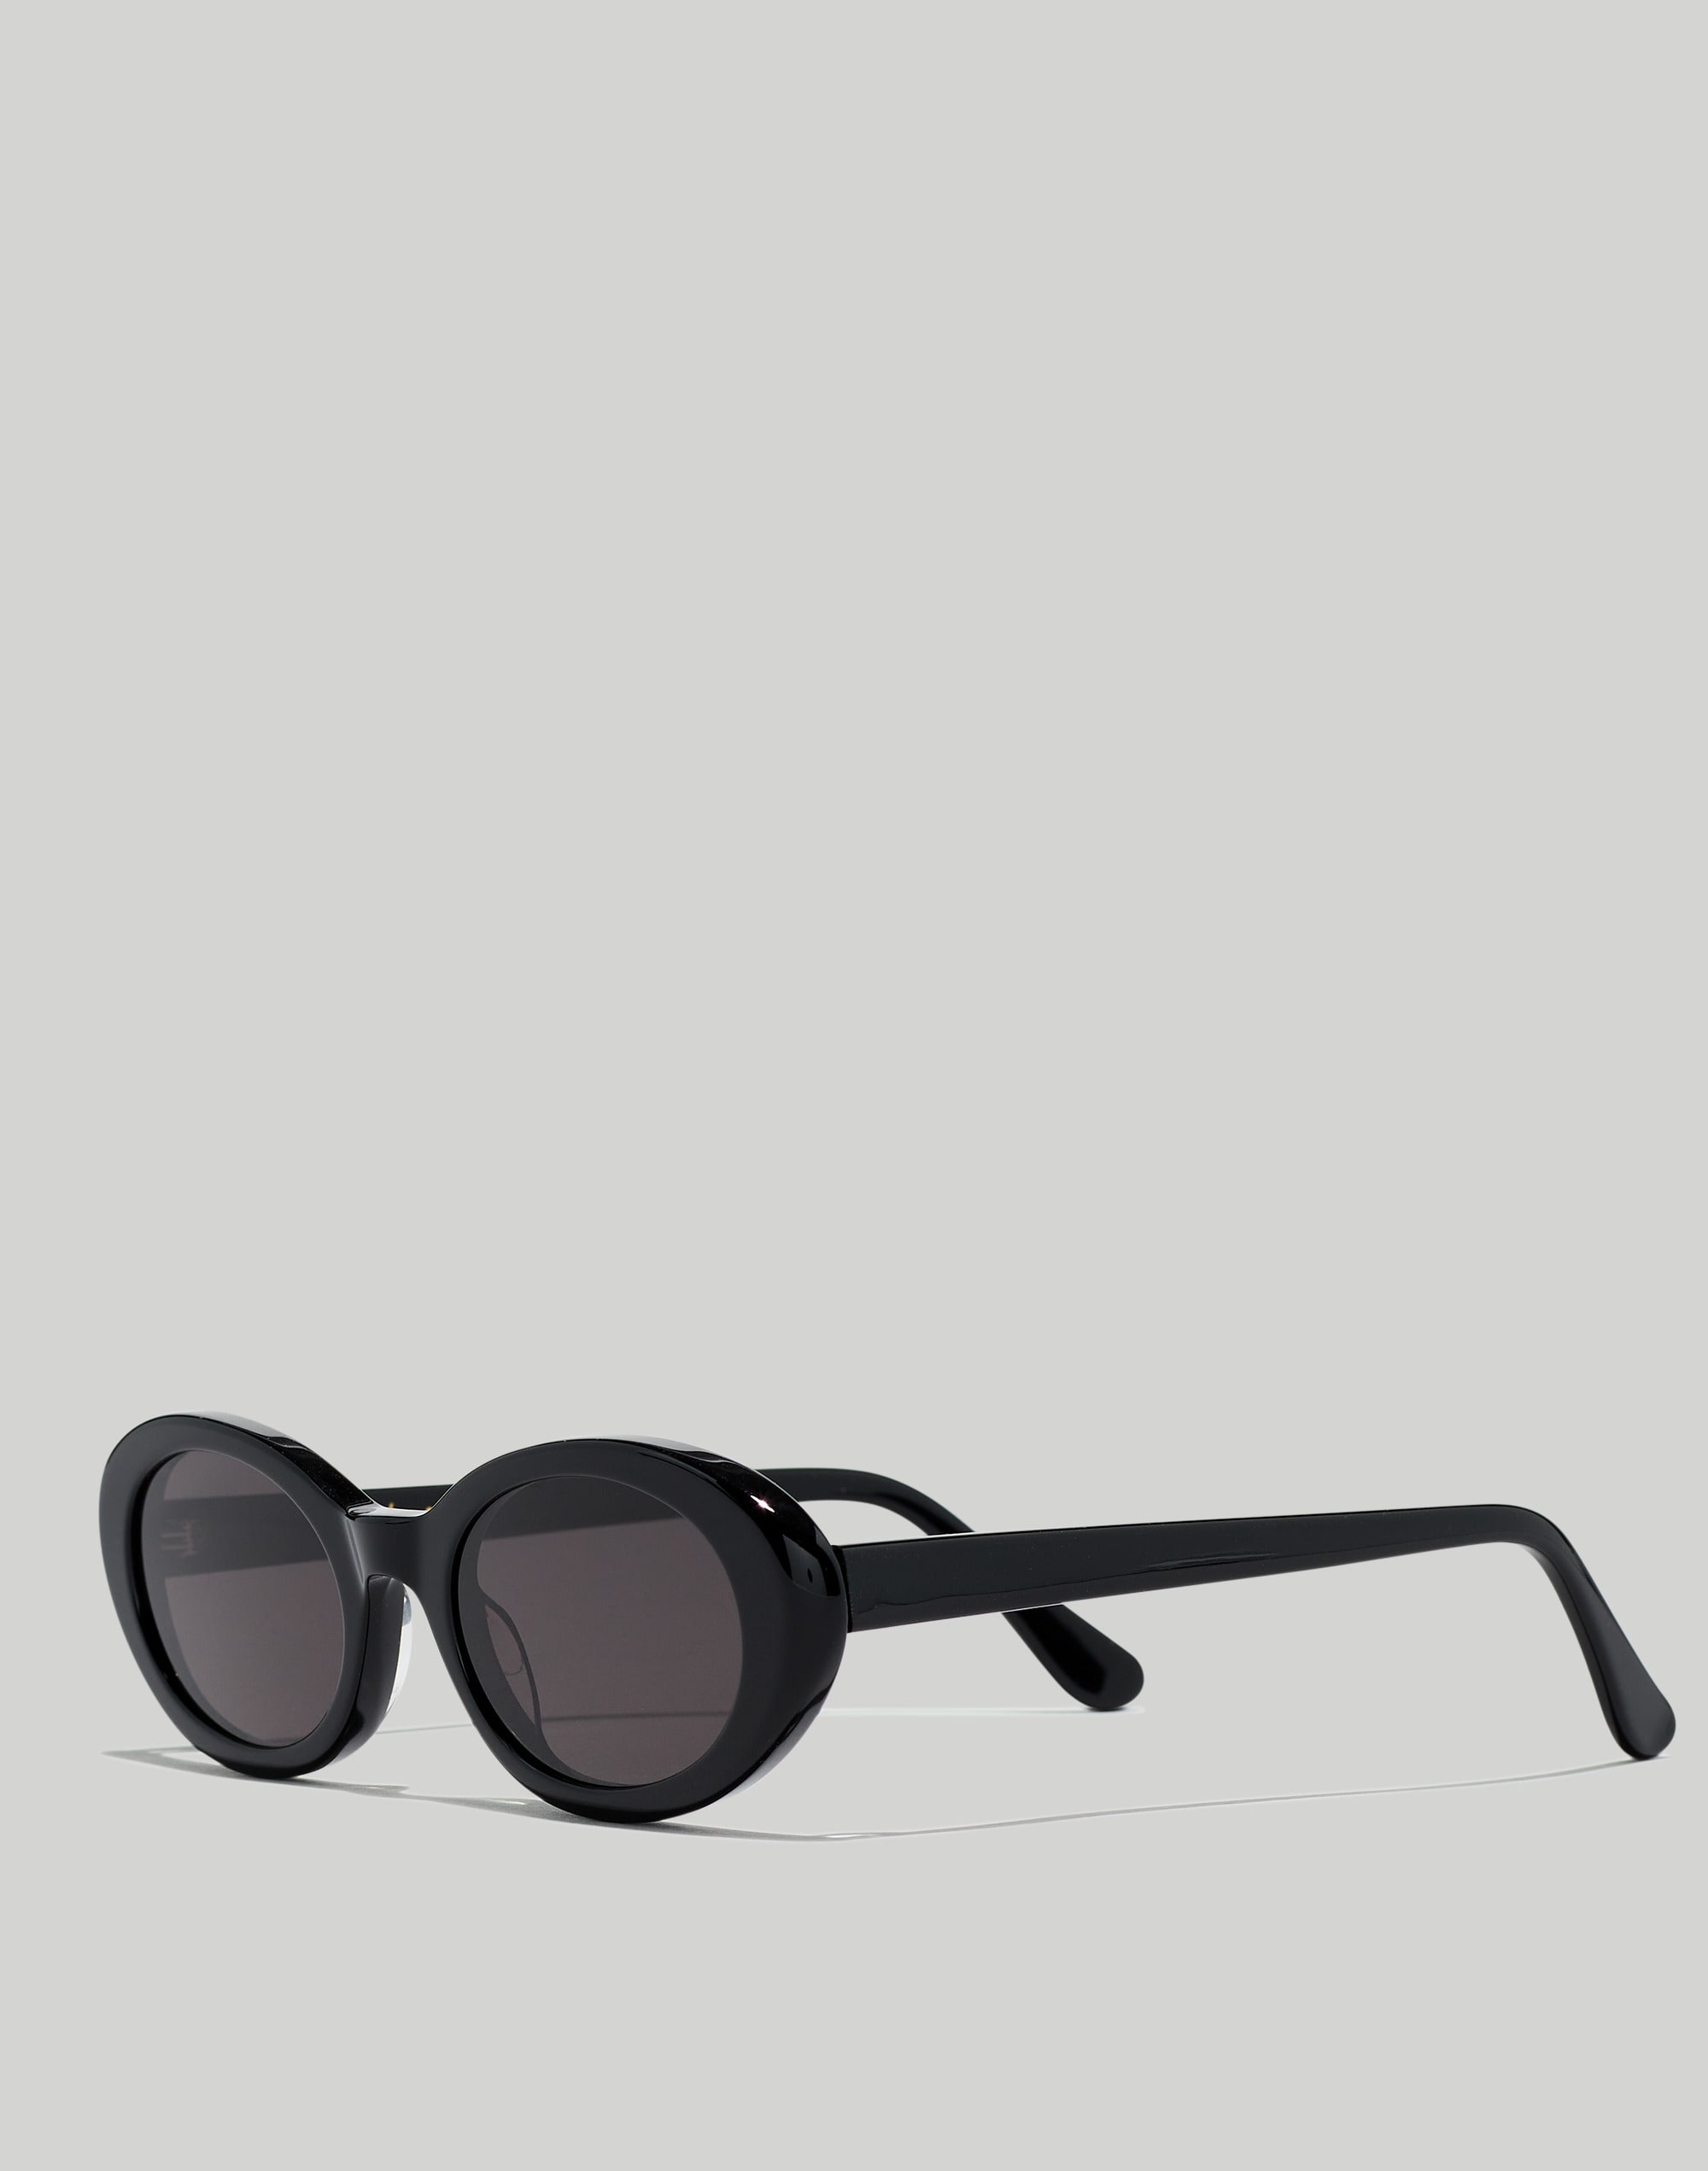 Mw Russell Oval Sunglasses In True Black